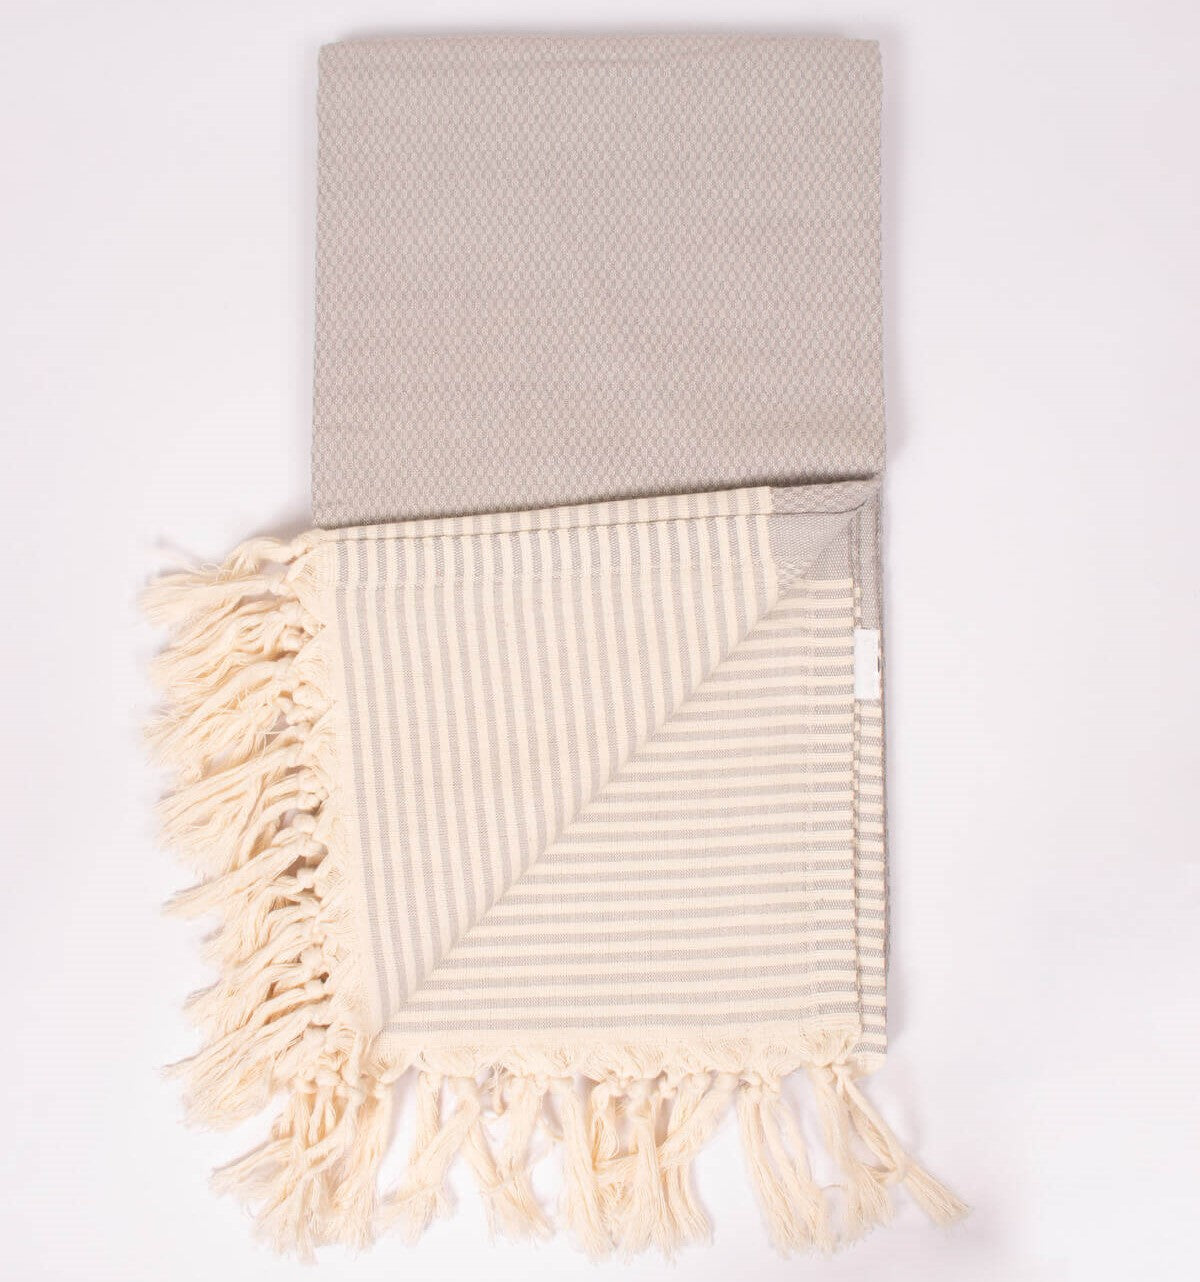 The Amalfi Hammam Towel in Pearl Grey